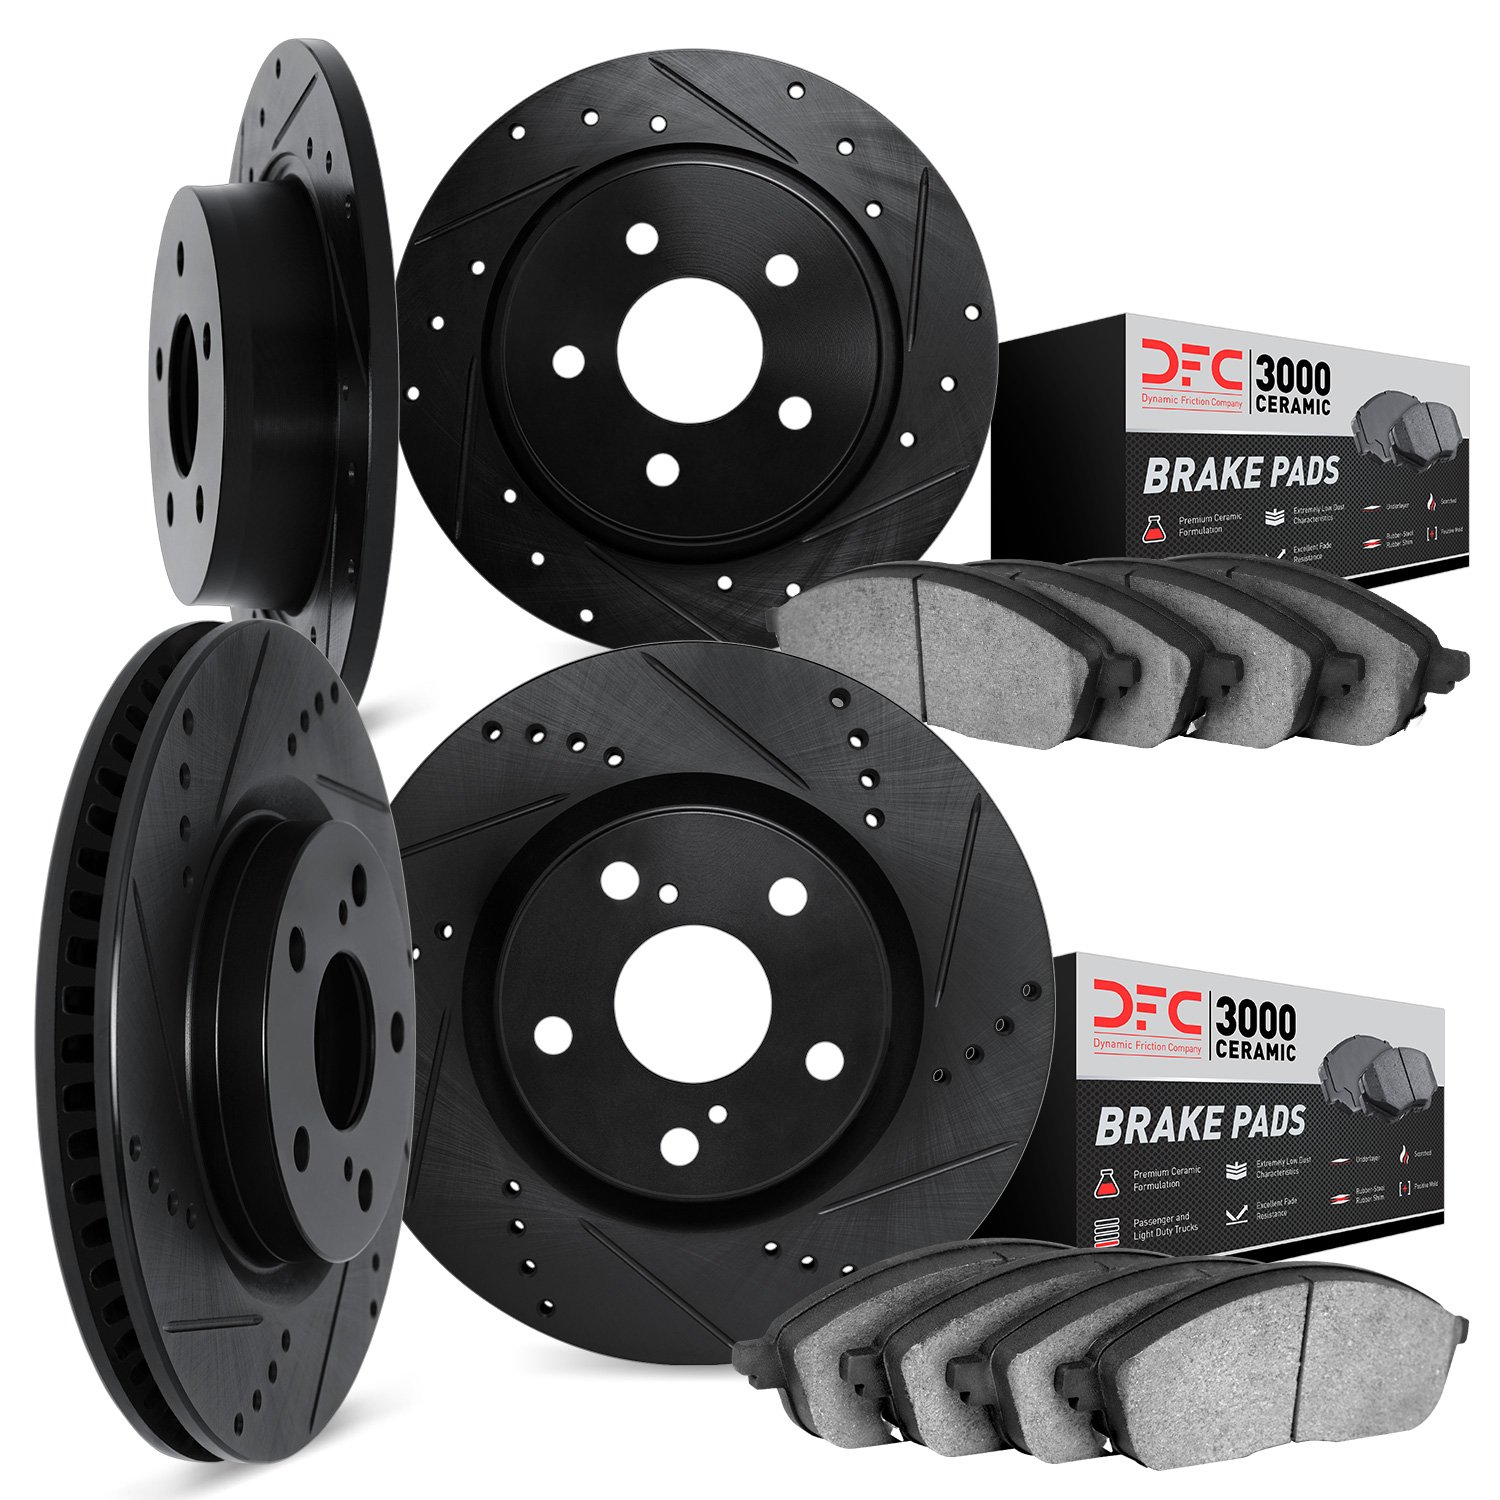 8304-80029 Drilled/Slotted Brake Rotors with 3000-Series Ceramic Brake Pads Kit [Black], 2006-2015 Ford/Lincoln/Mercury/Mazda, P